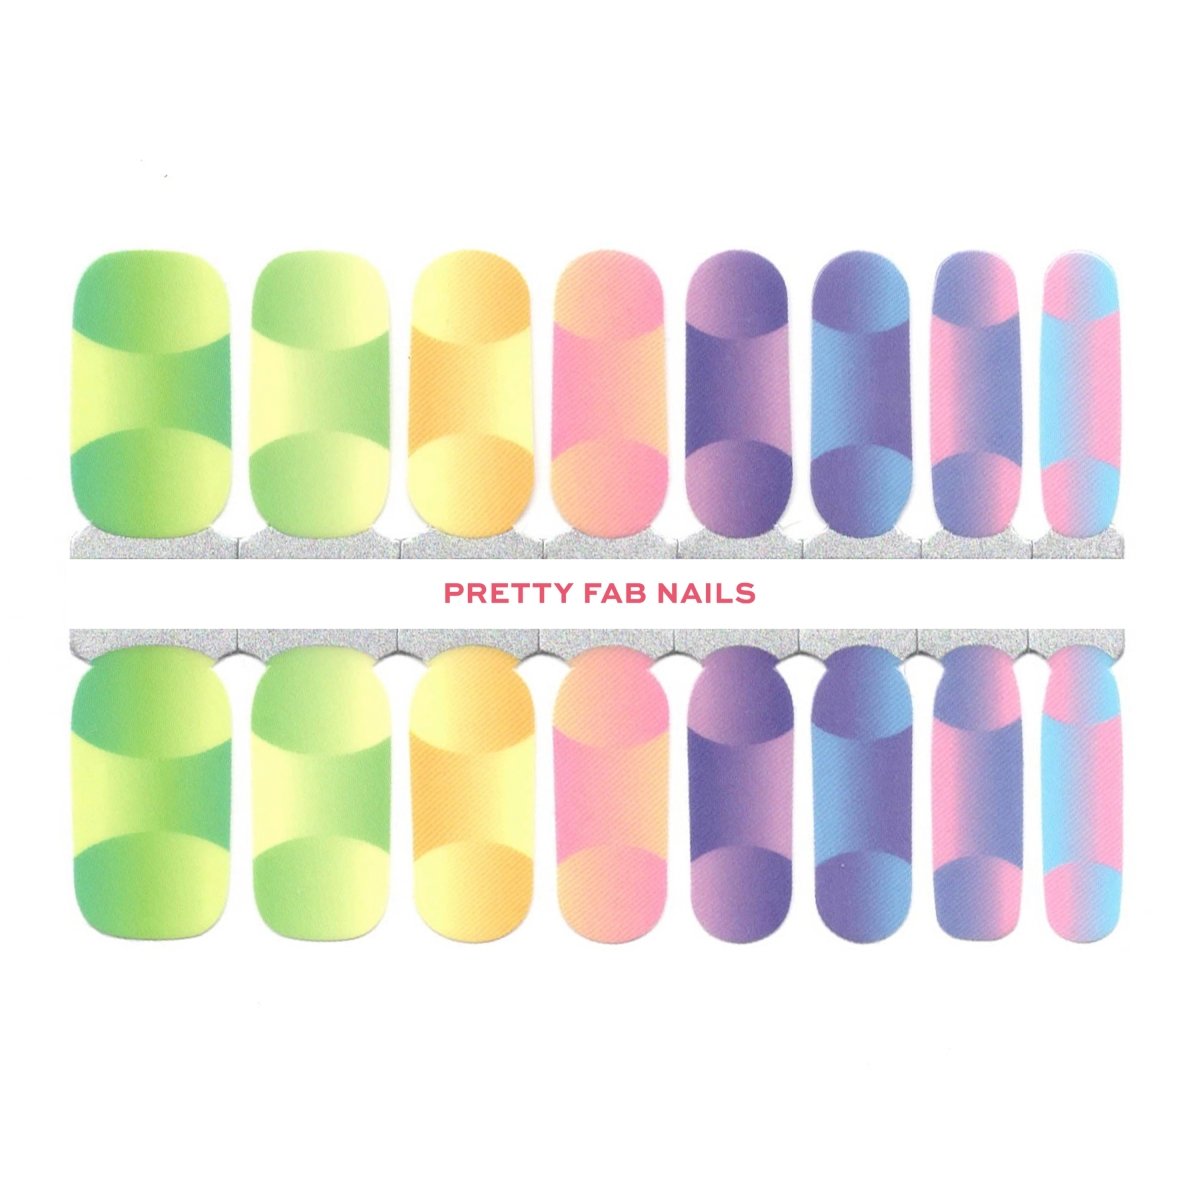 Freaky Friday - Pretty Fab Nails